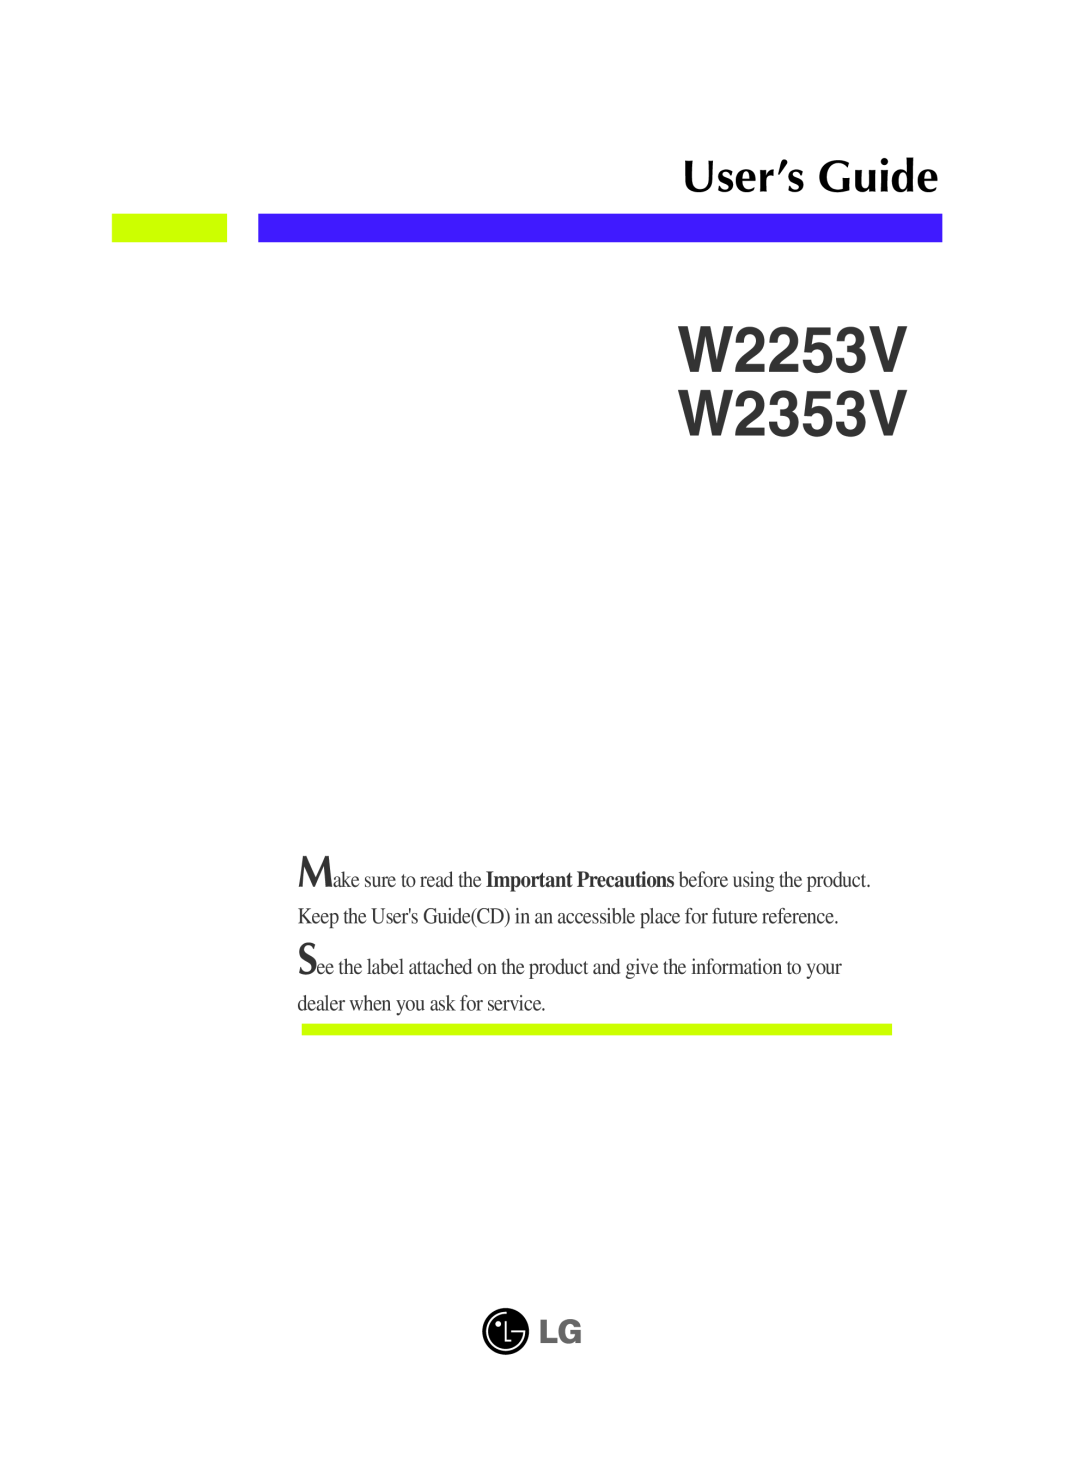 LG Electronics manual W2253V W2353V, User’s Guide 